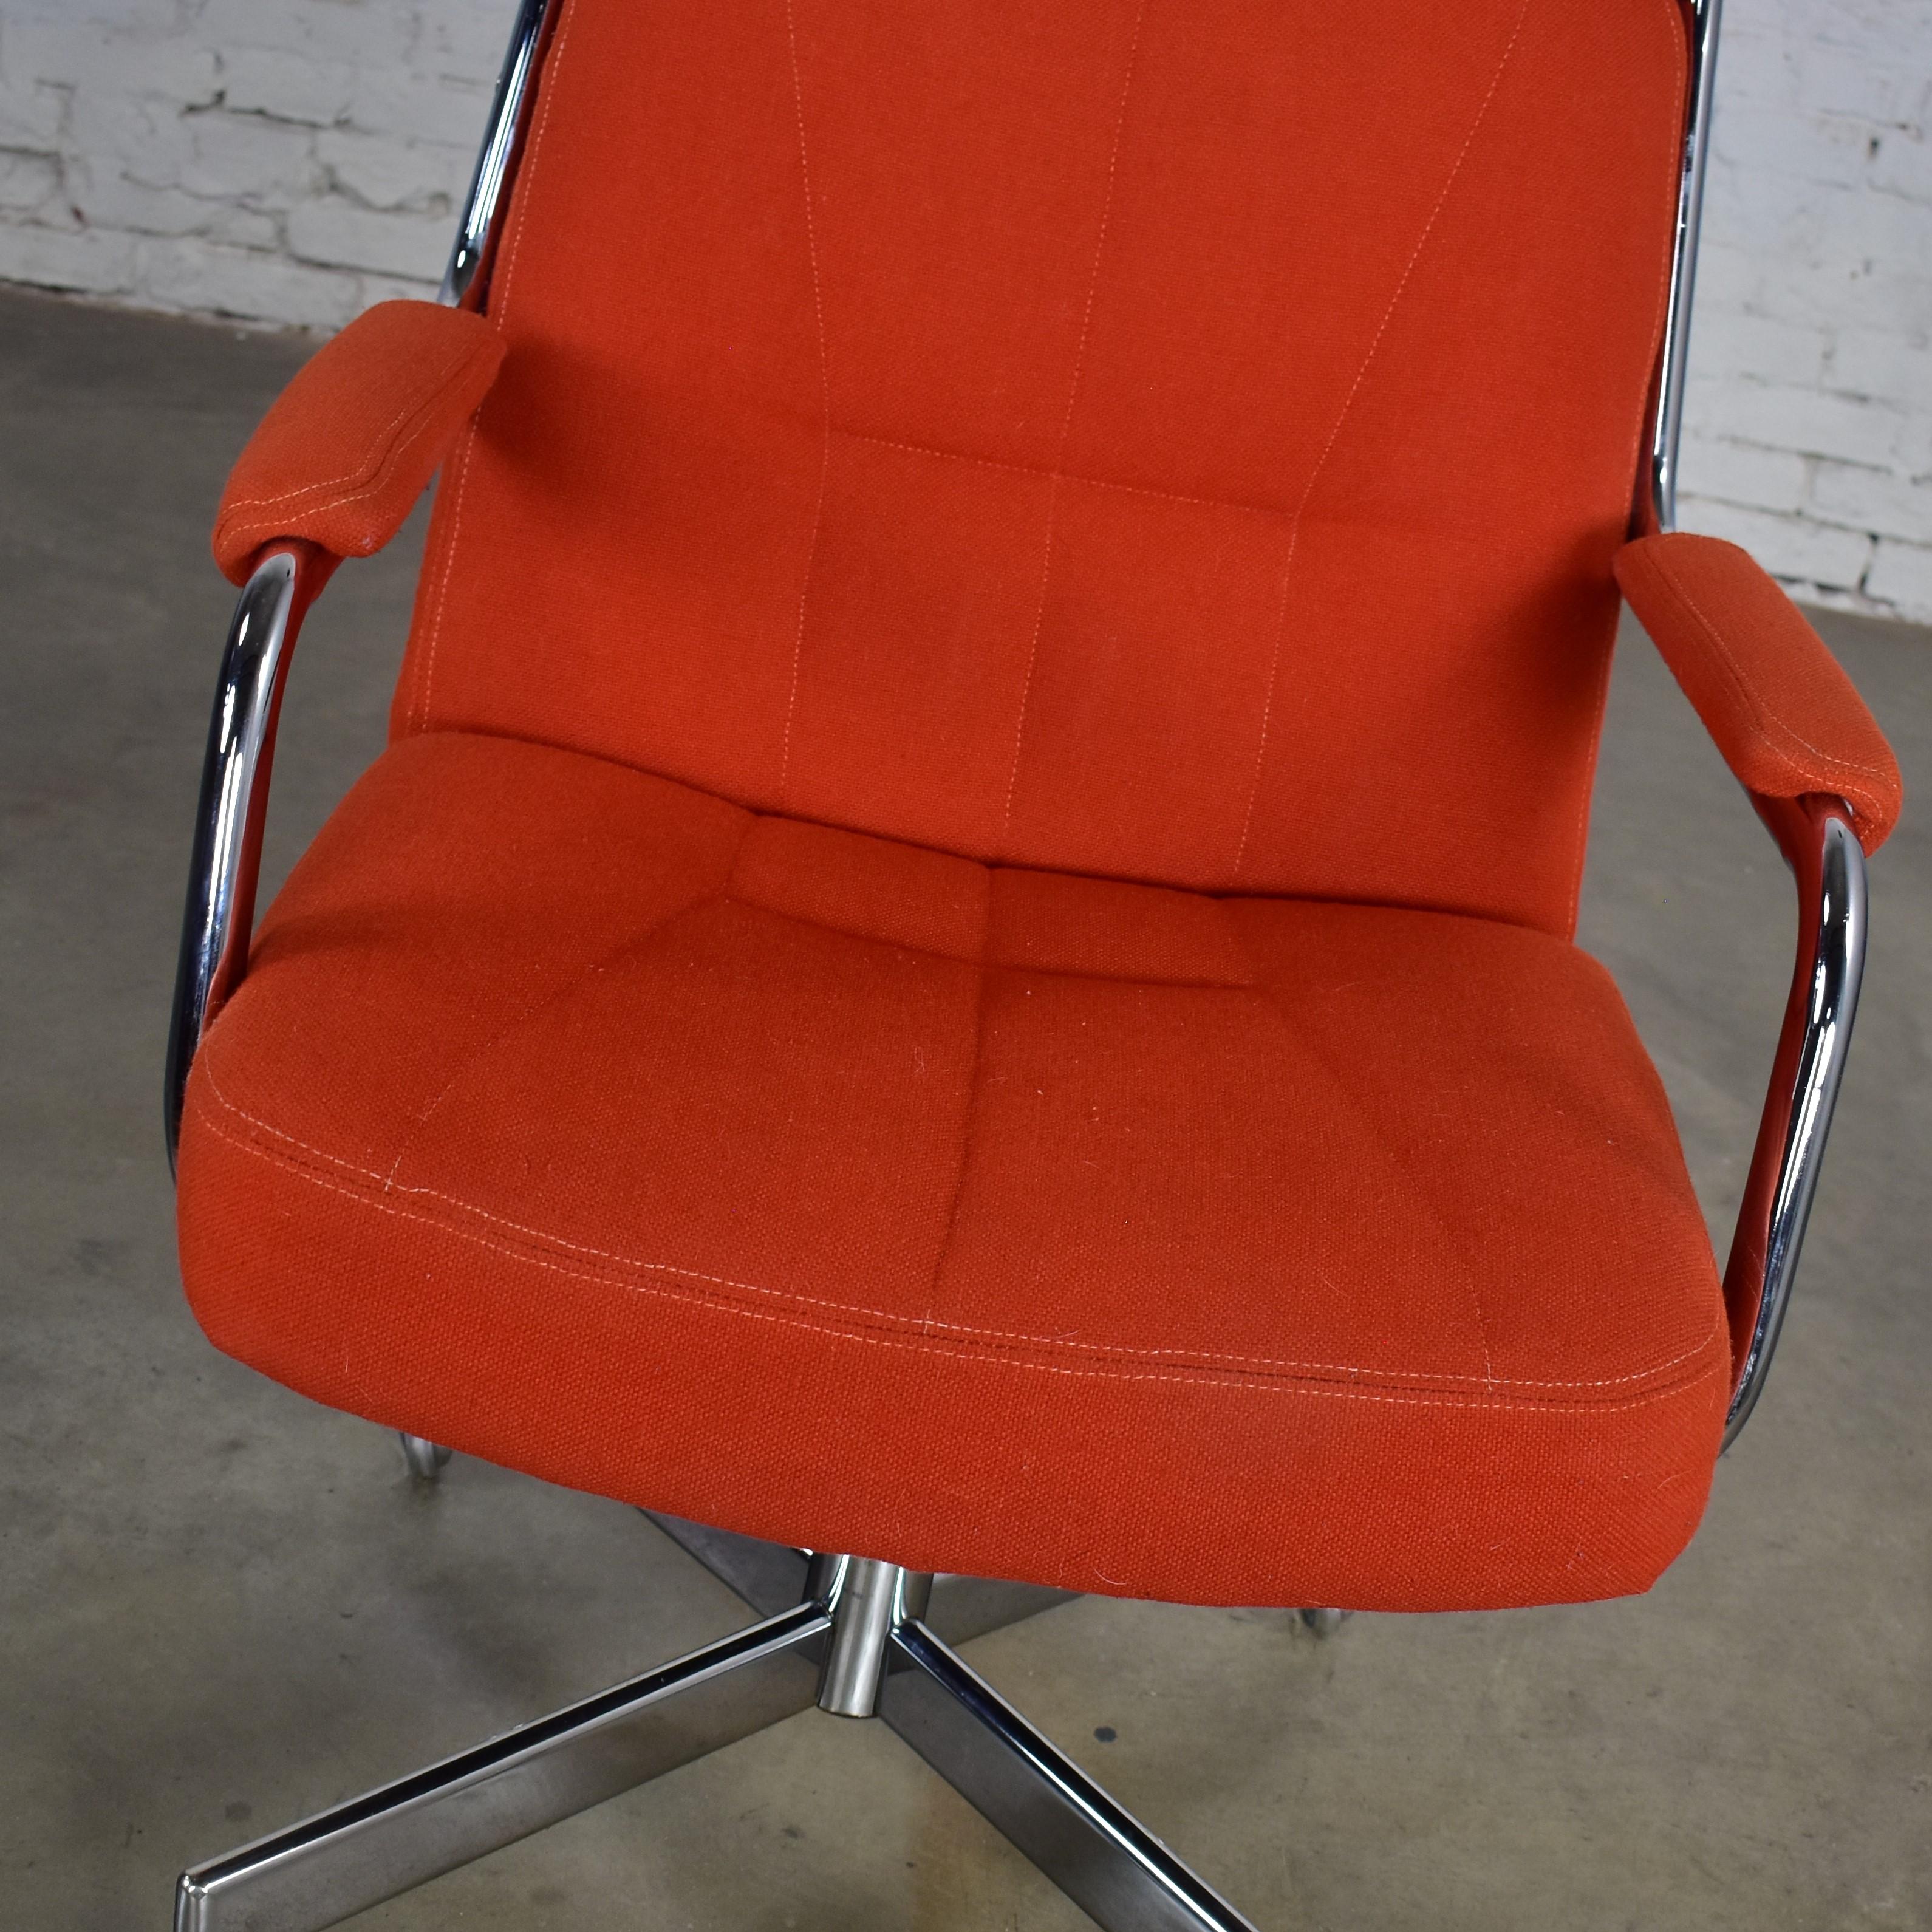 Chromcraft Adjustable Armed High Back Rolling Office Chair Orange Hopsack Fabric 3